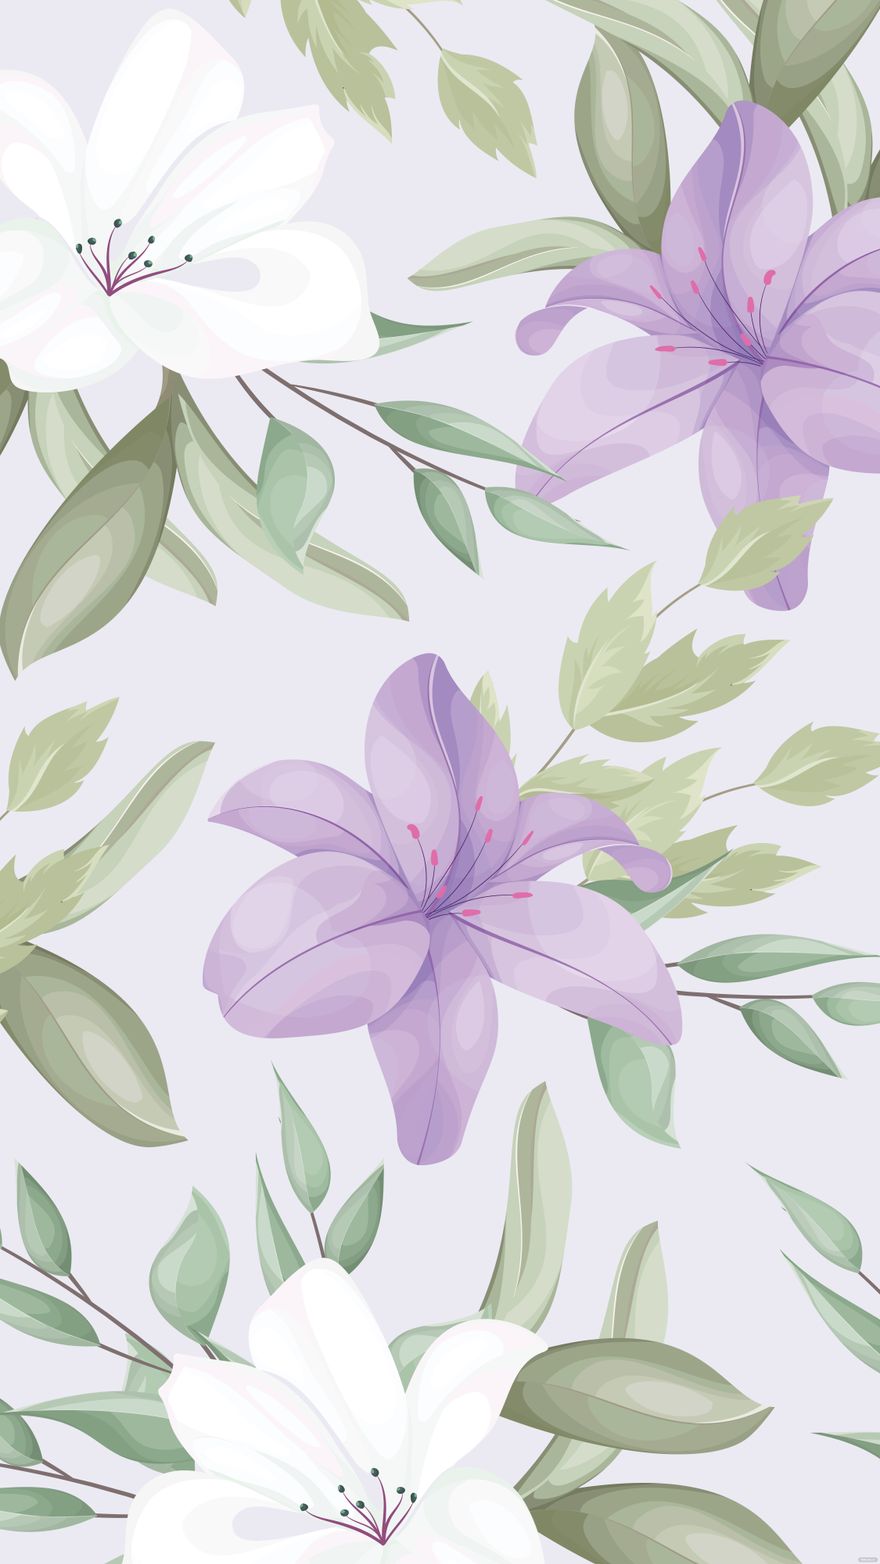 Simple Floral Watercolor Background in Illustrator, EPS, SVG, JPG